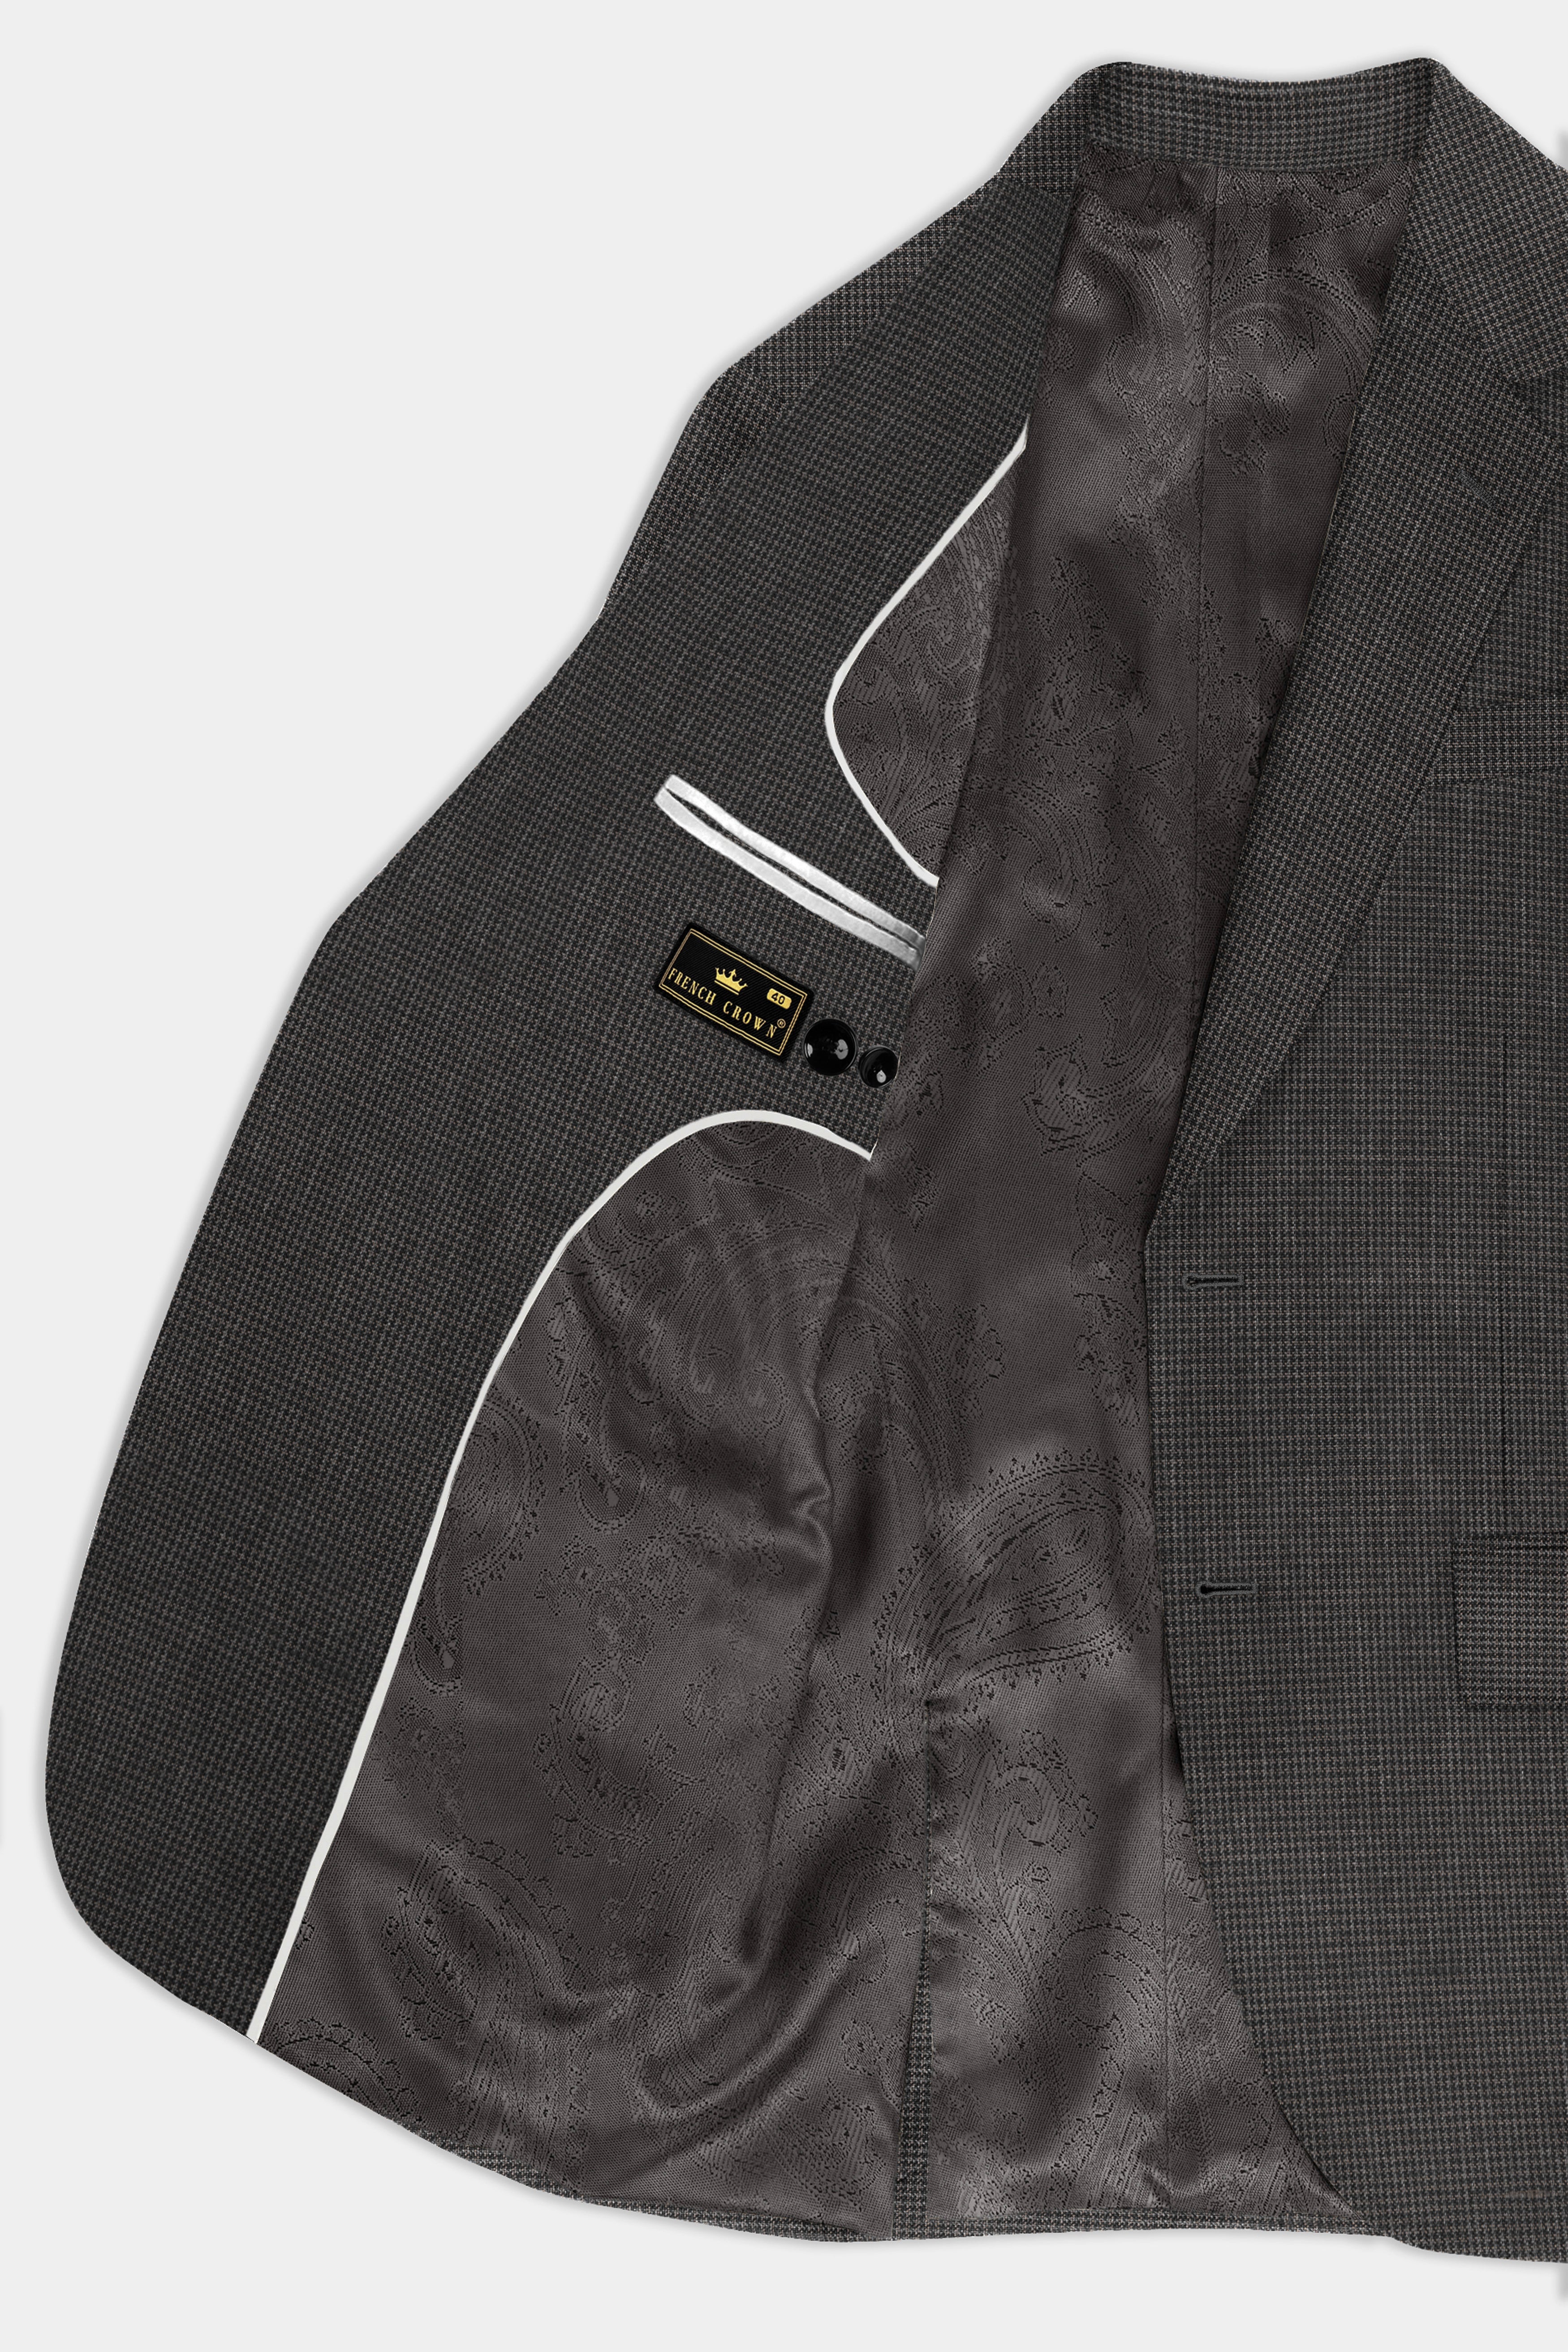 Iridium Brown Micro Checkered Wool Blend Suit